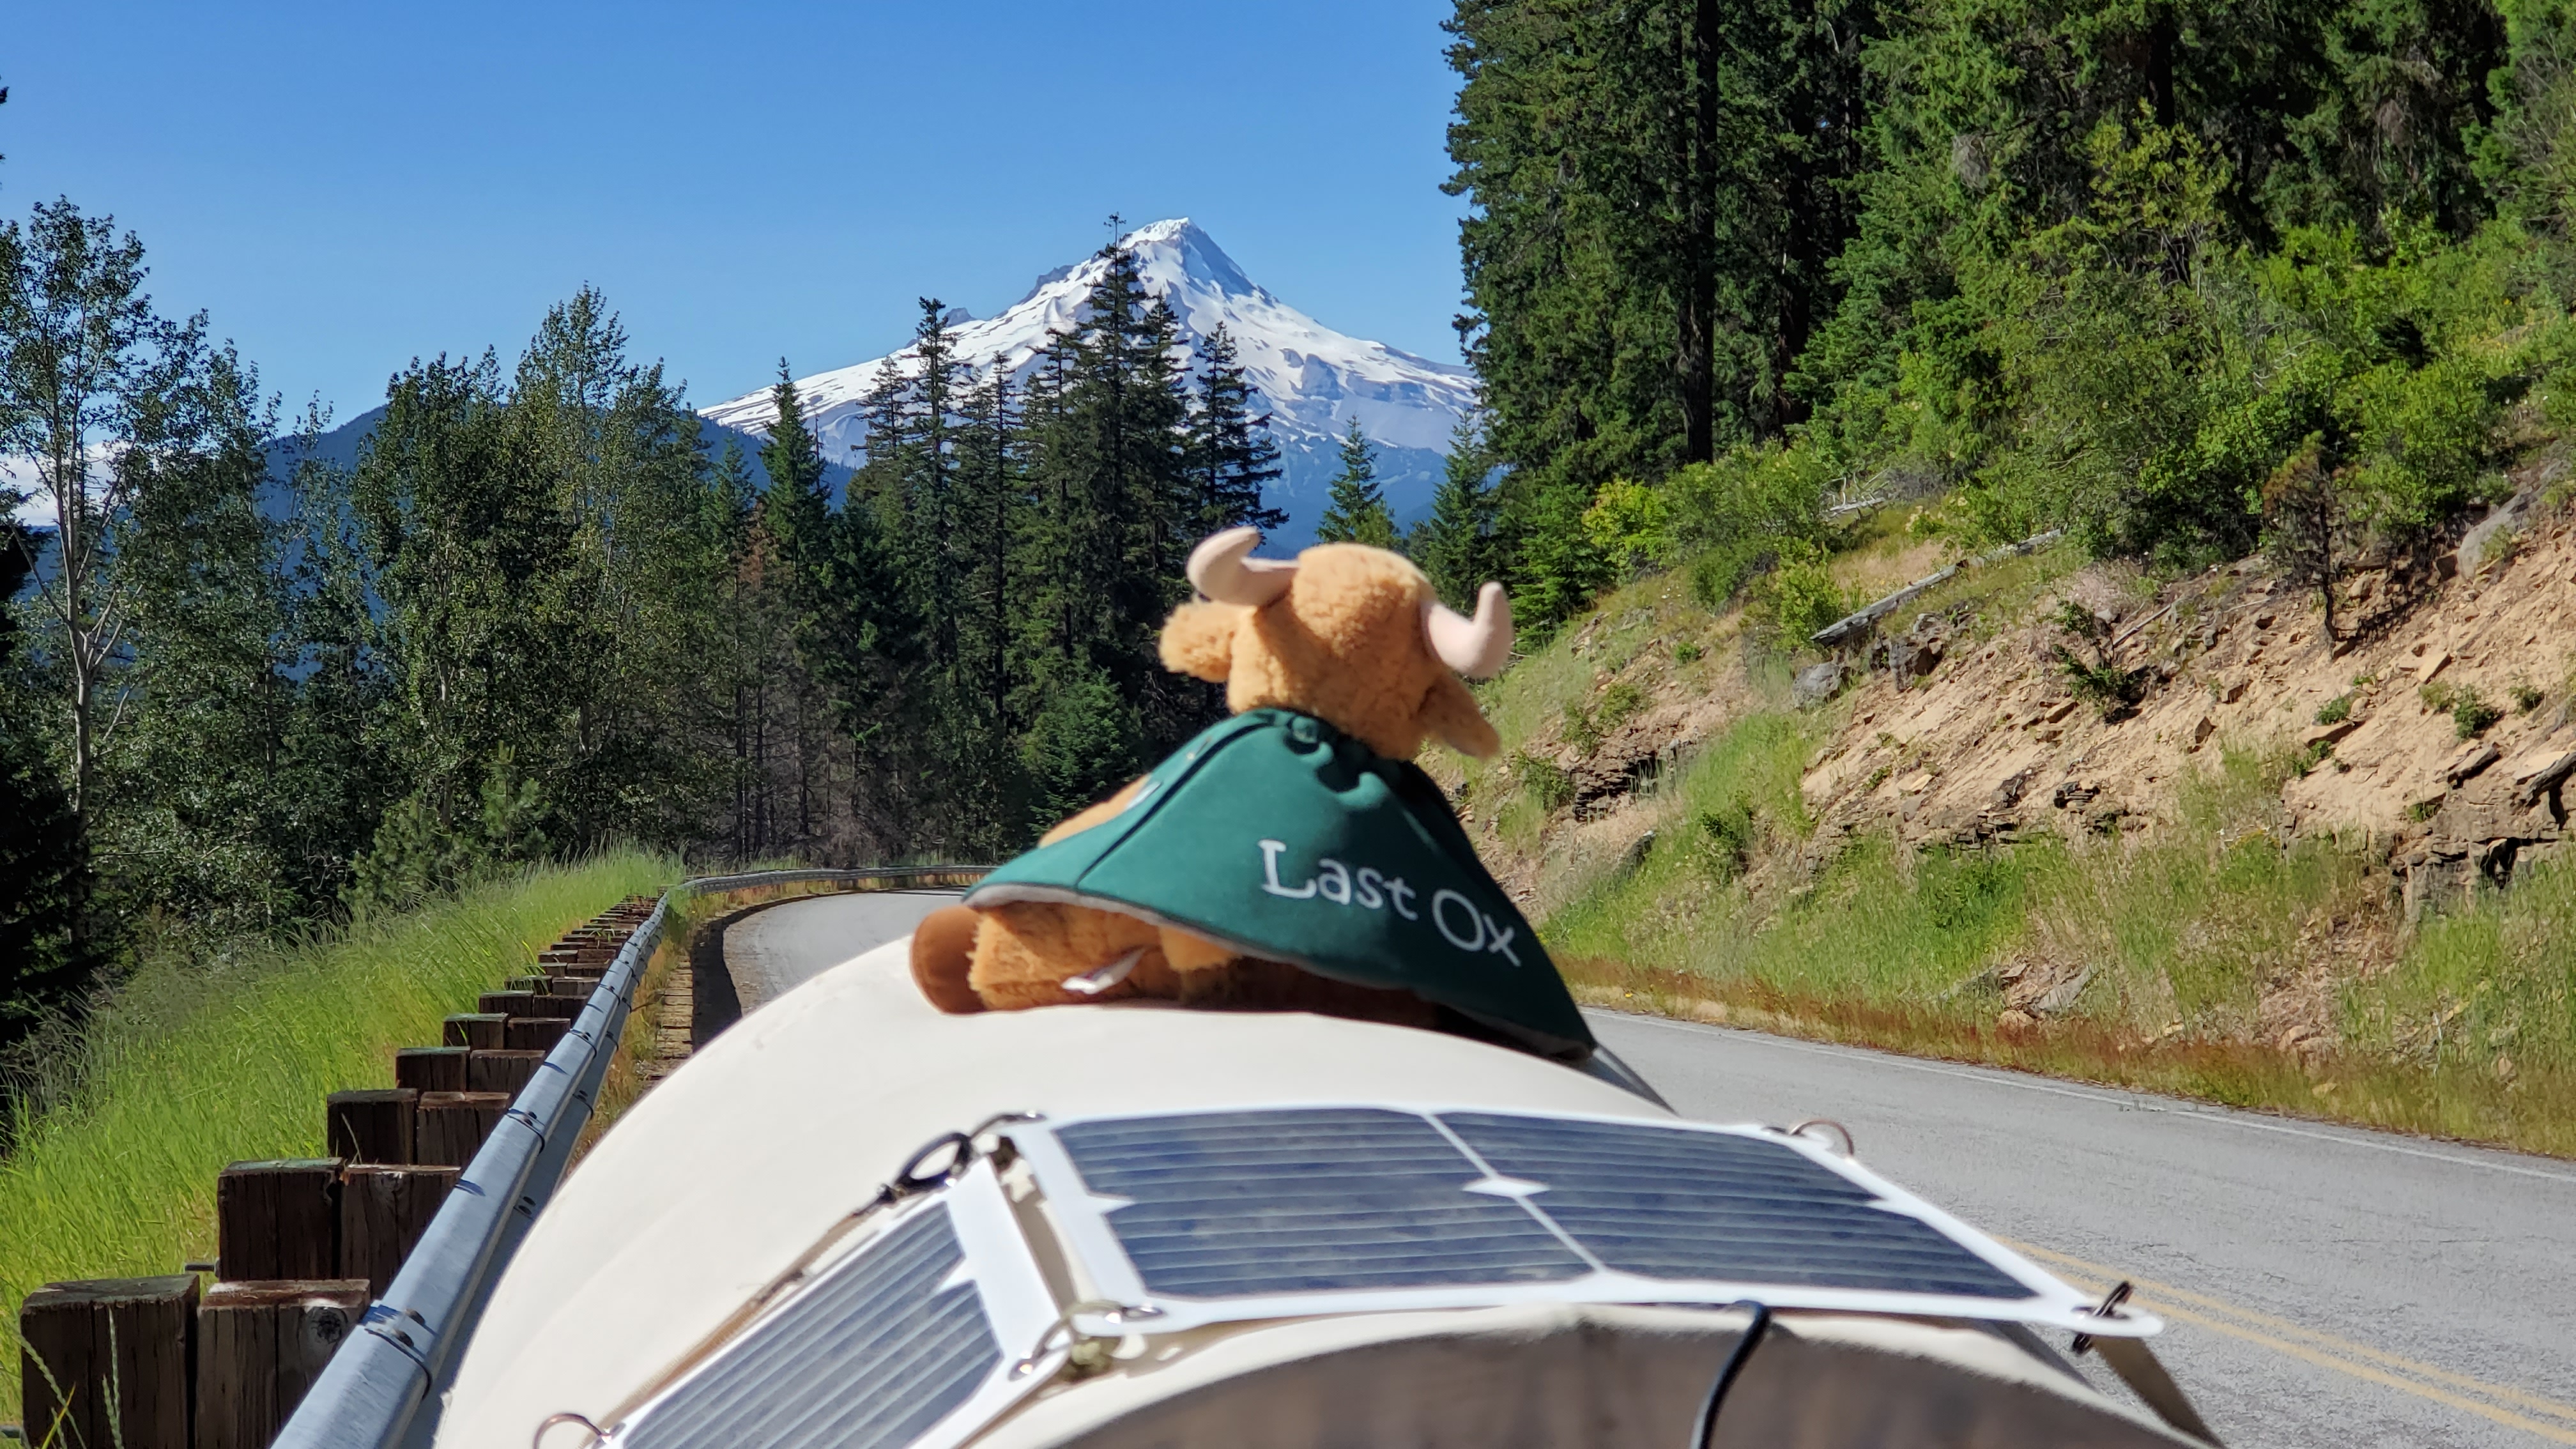 Oregonian hikes entire Oregon Trail, pushing covered wagon - OPB